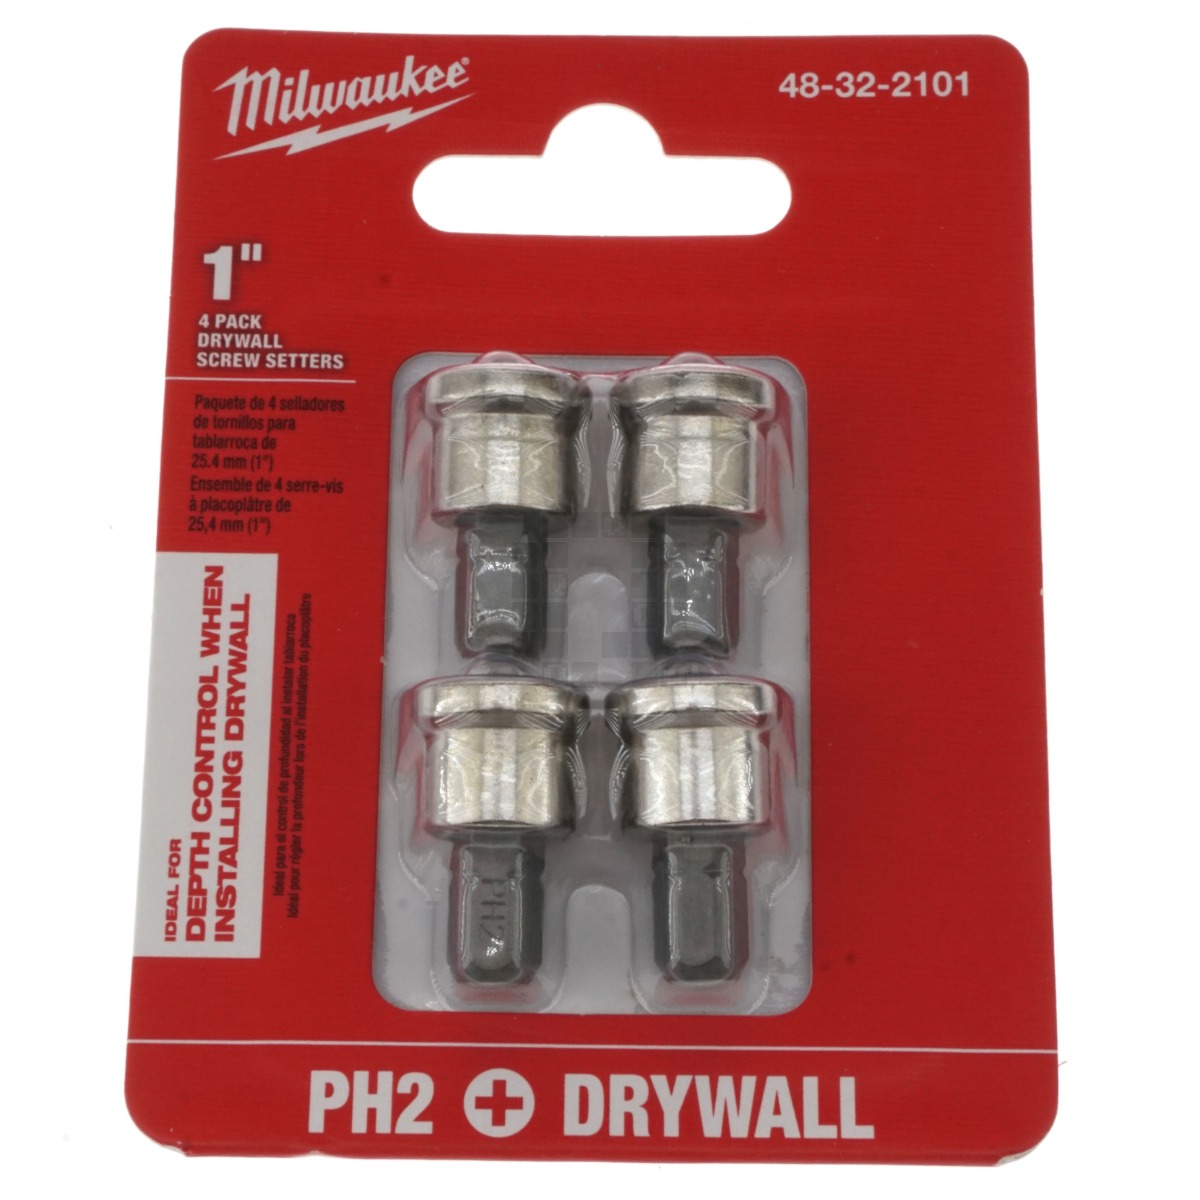 Milwaukee 48-32-2101 1" PH2 Phillips Drywall Screw Setters, 4 pack